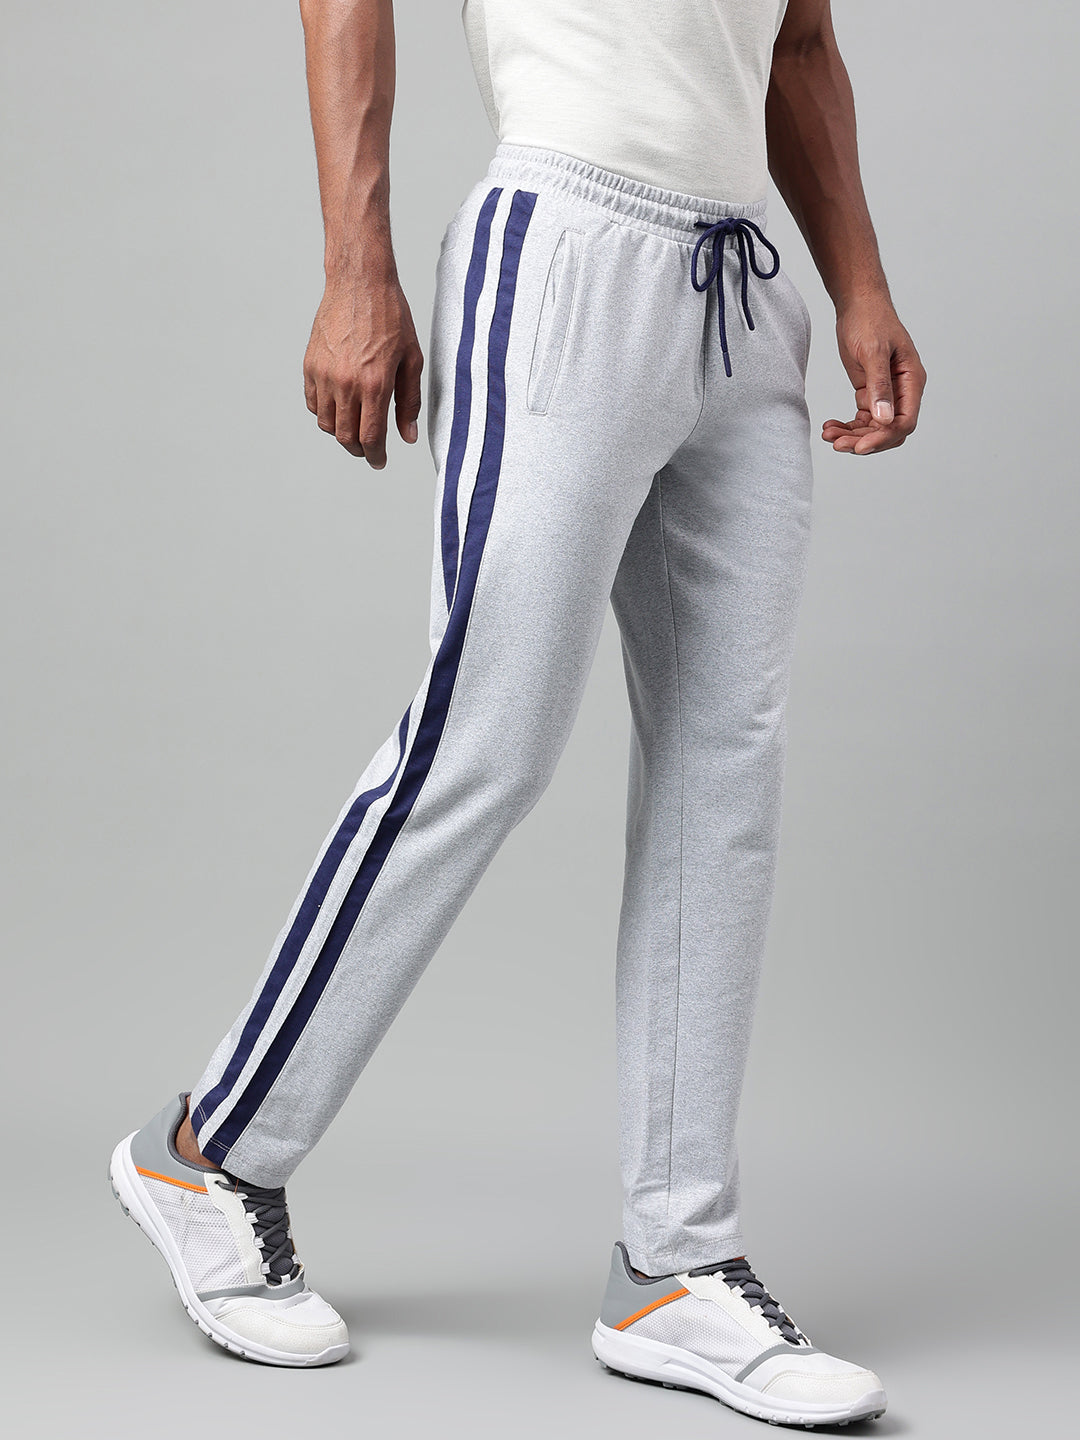 Alcis Men's Light Grey Melange Soft-Touch Slim-Fit Athleisure Track Pants